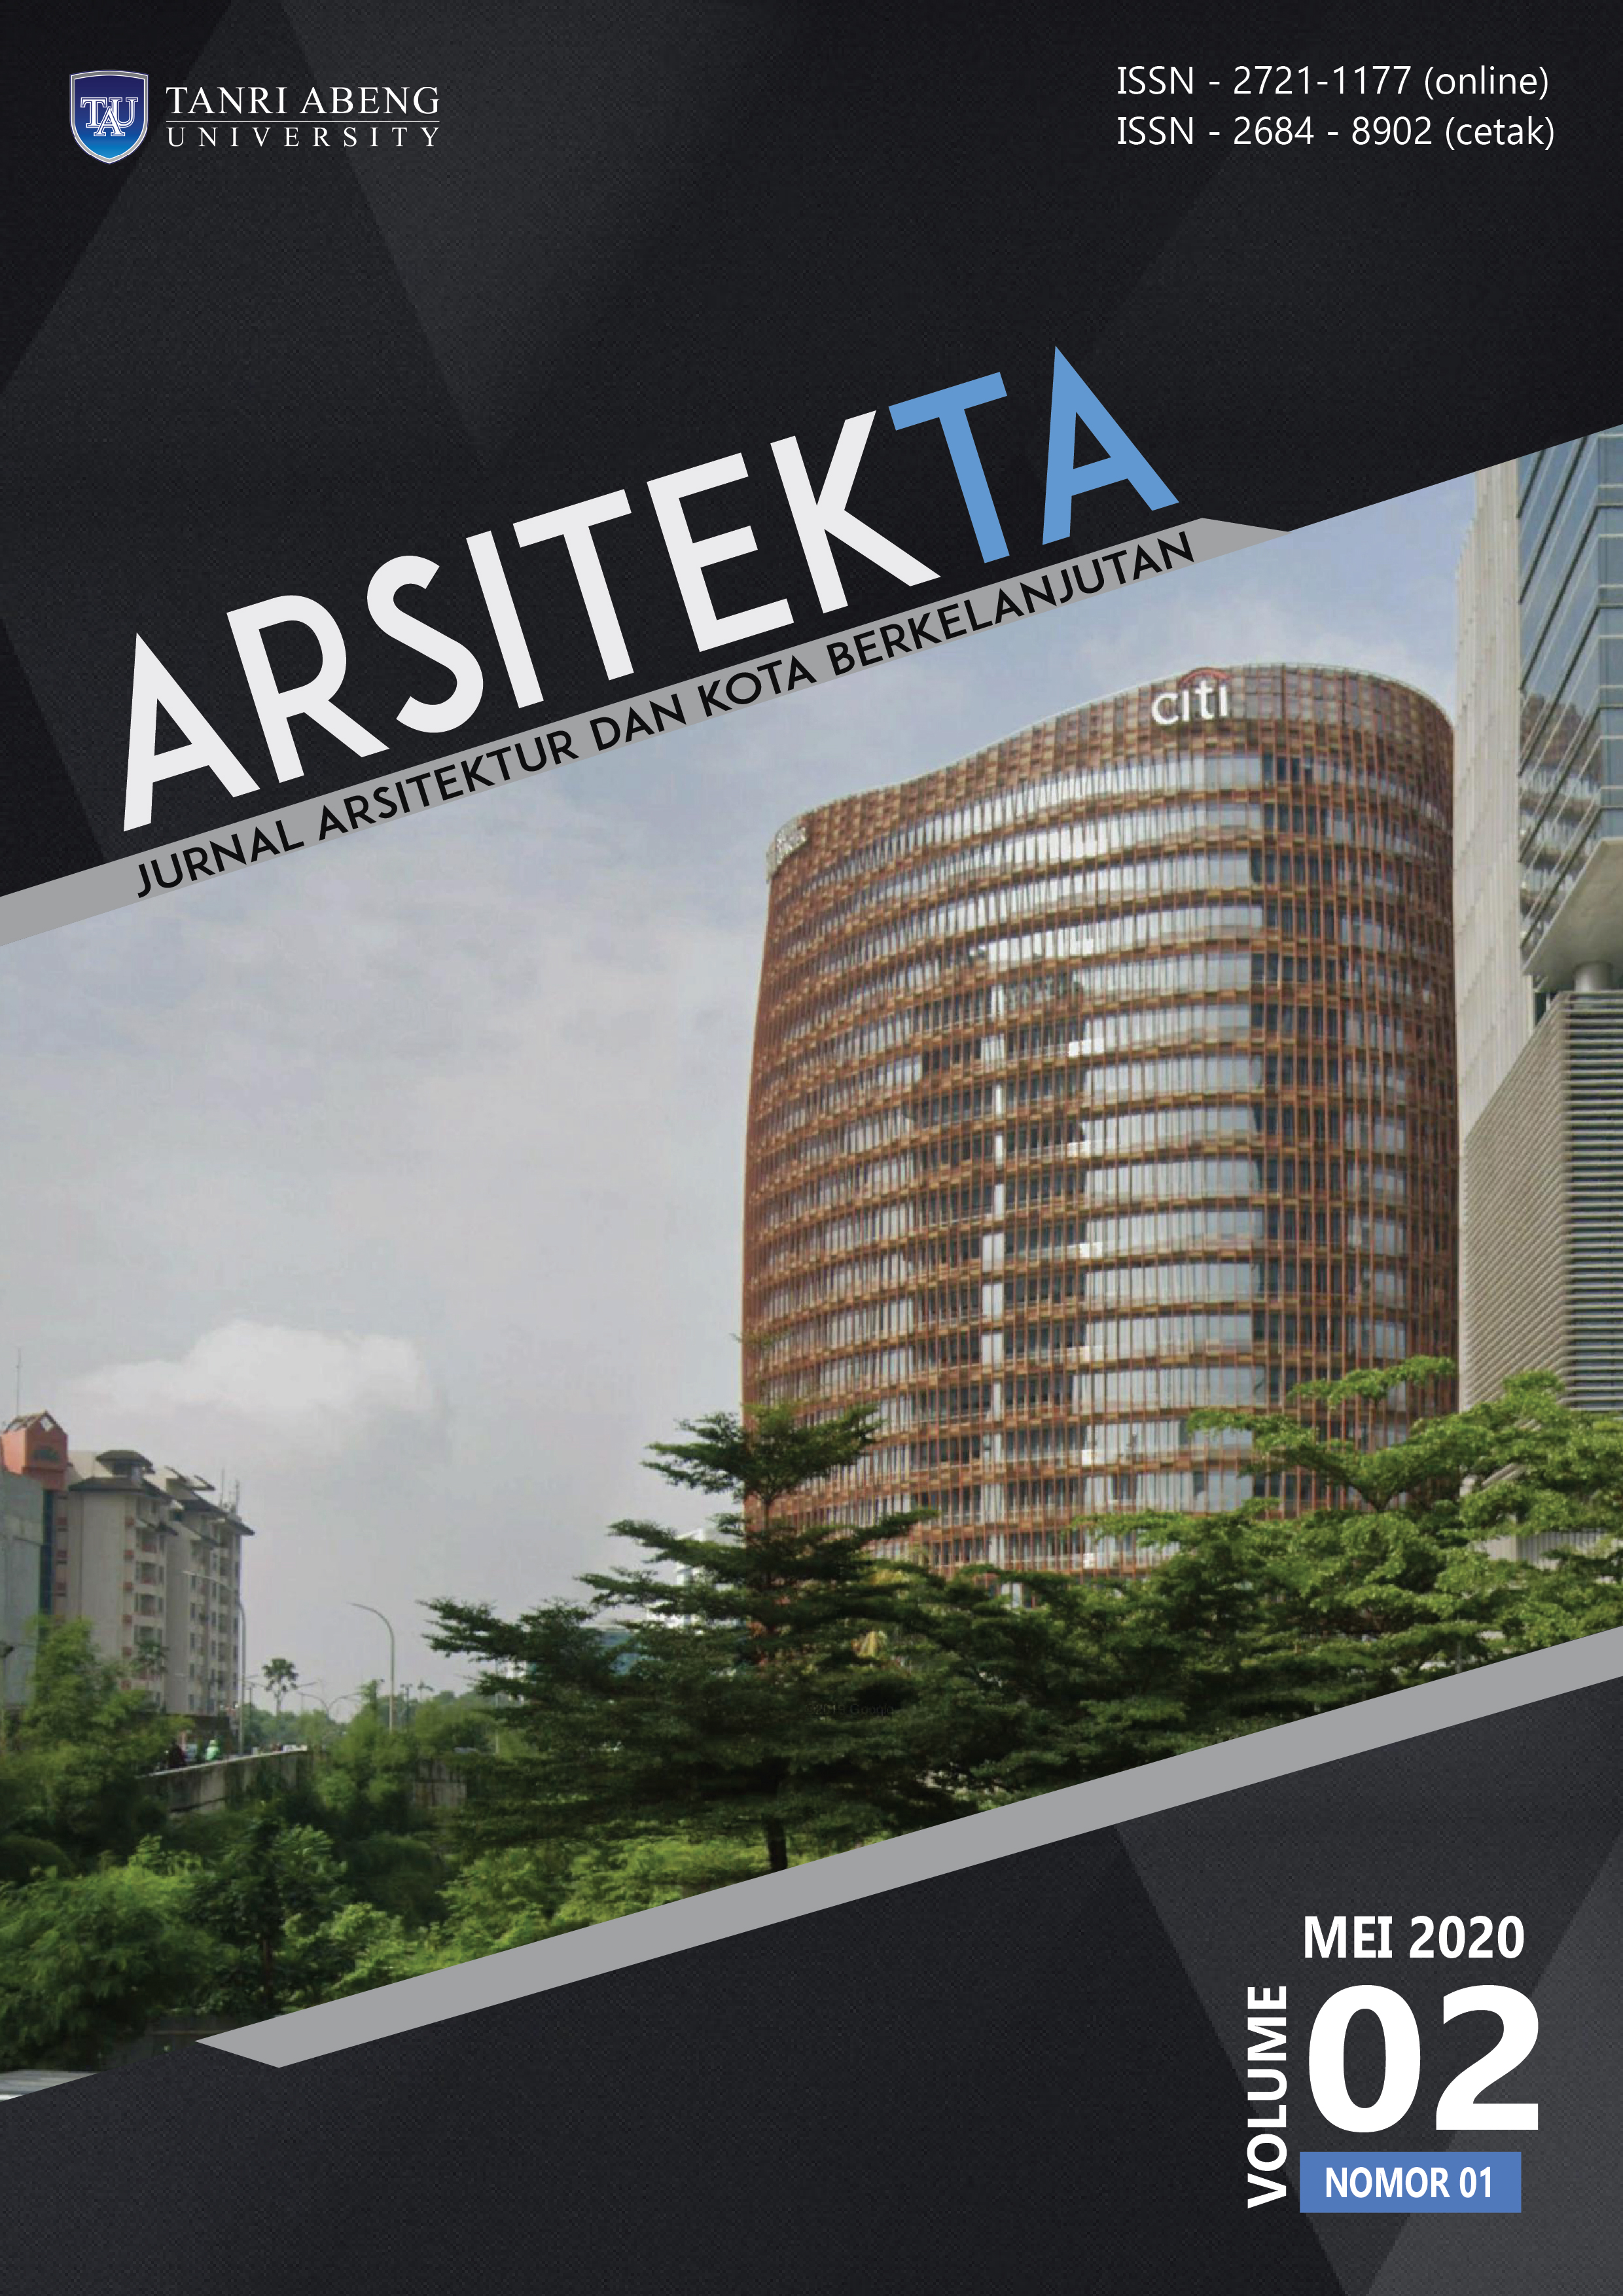 					View Vol. 2 No. 01 Mei (2020): Arsitekta : Jurnal Arsitektur dan Kota Berkelanjutan
				